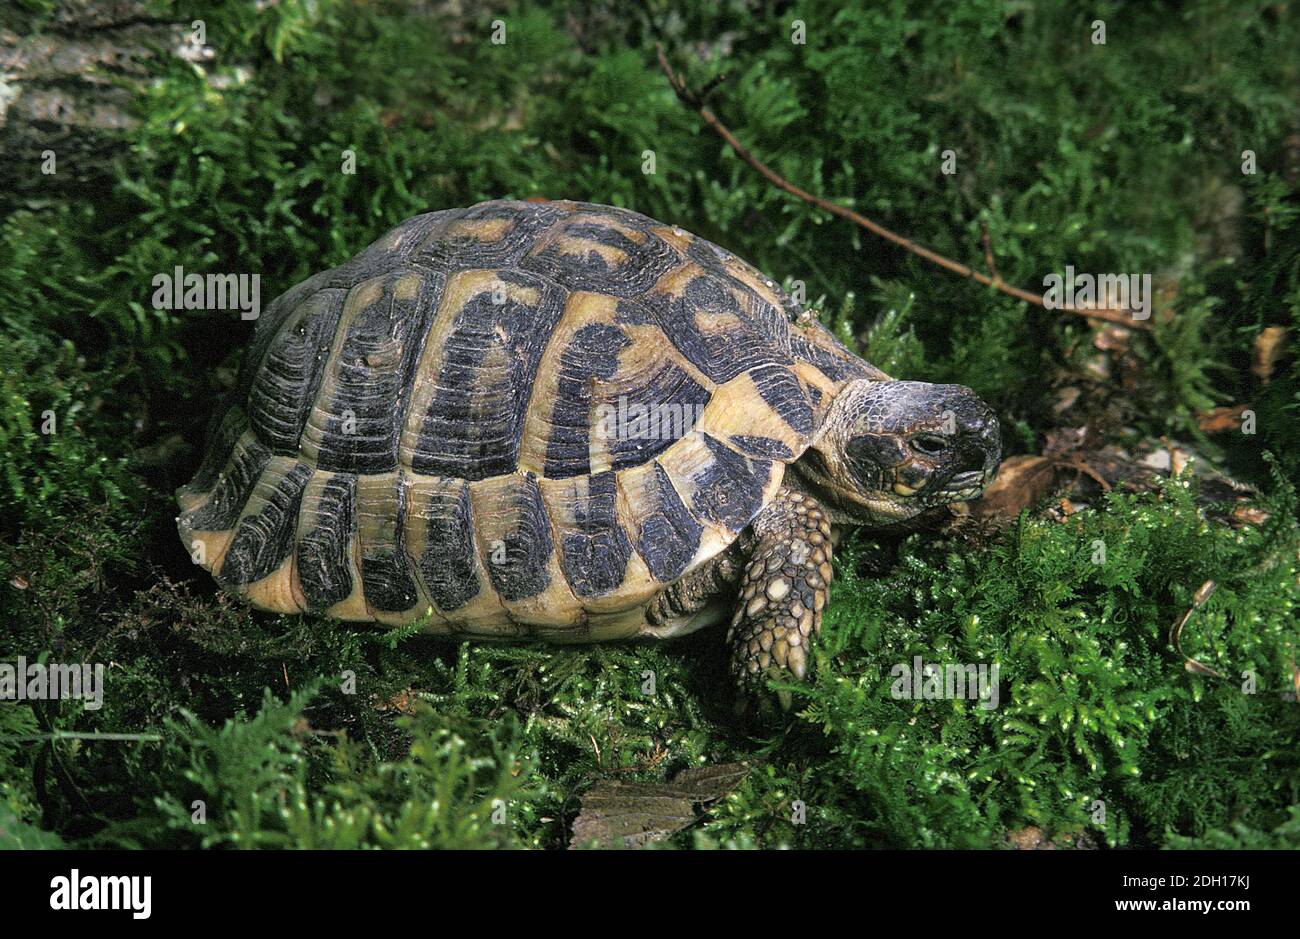 Hermann's Tortoise, testudo hermanni, Adult standing on Moss Stock Photo